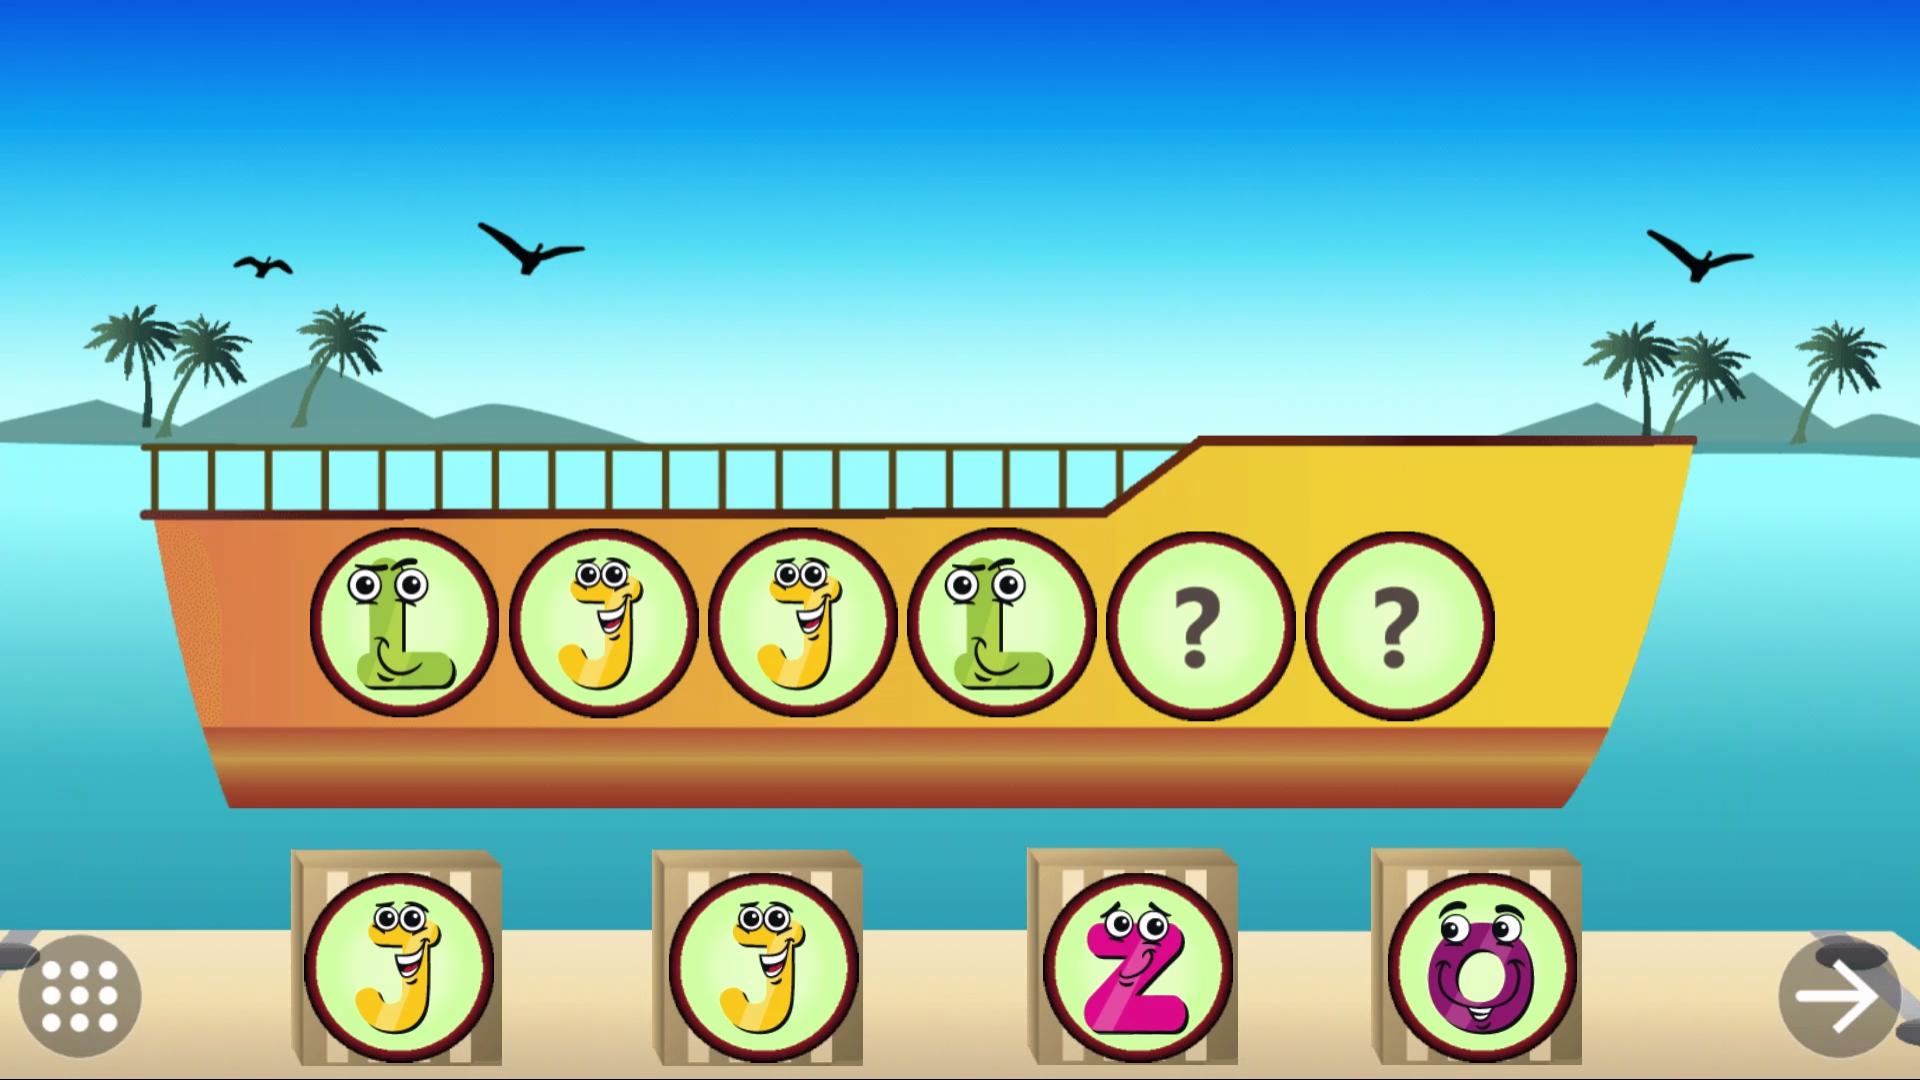 Kids Fun Learning - Educational Cool Math Games 1.0.2.0 Screenshot 10